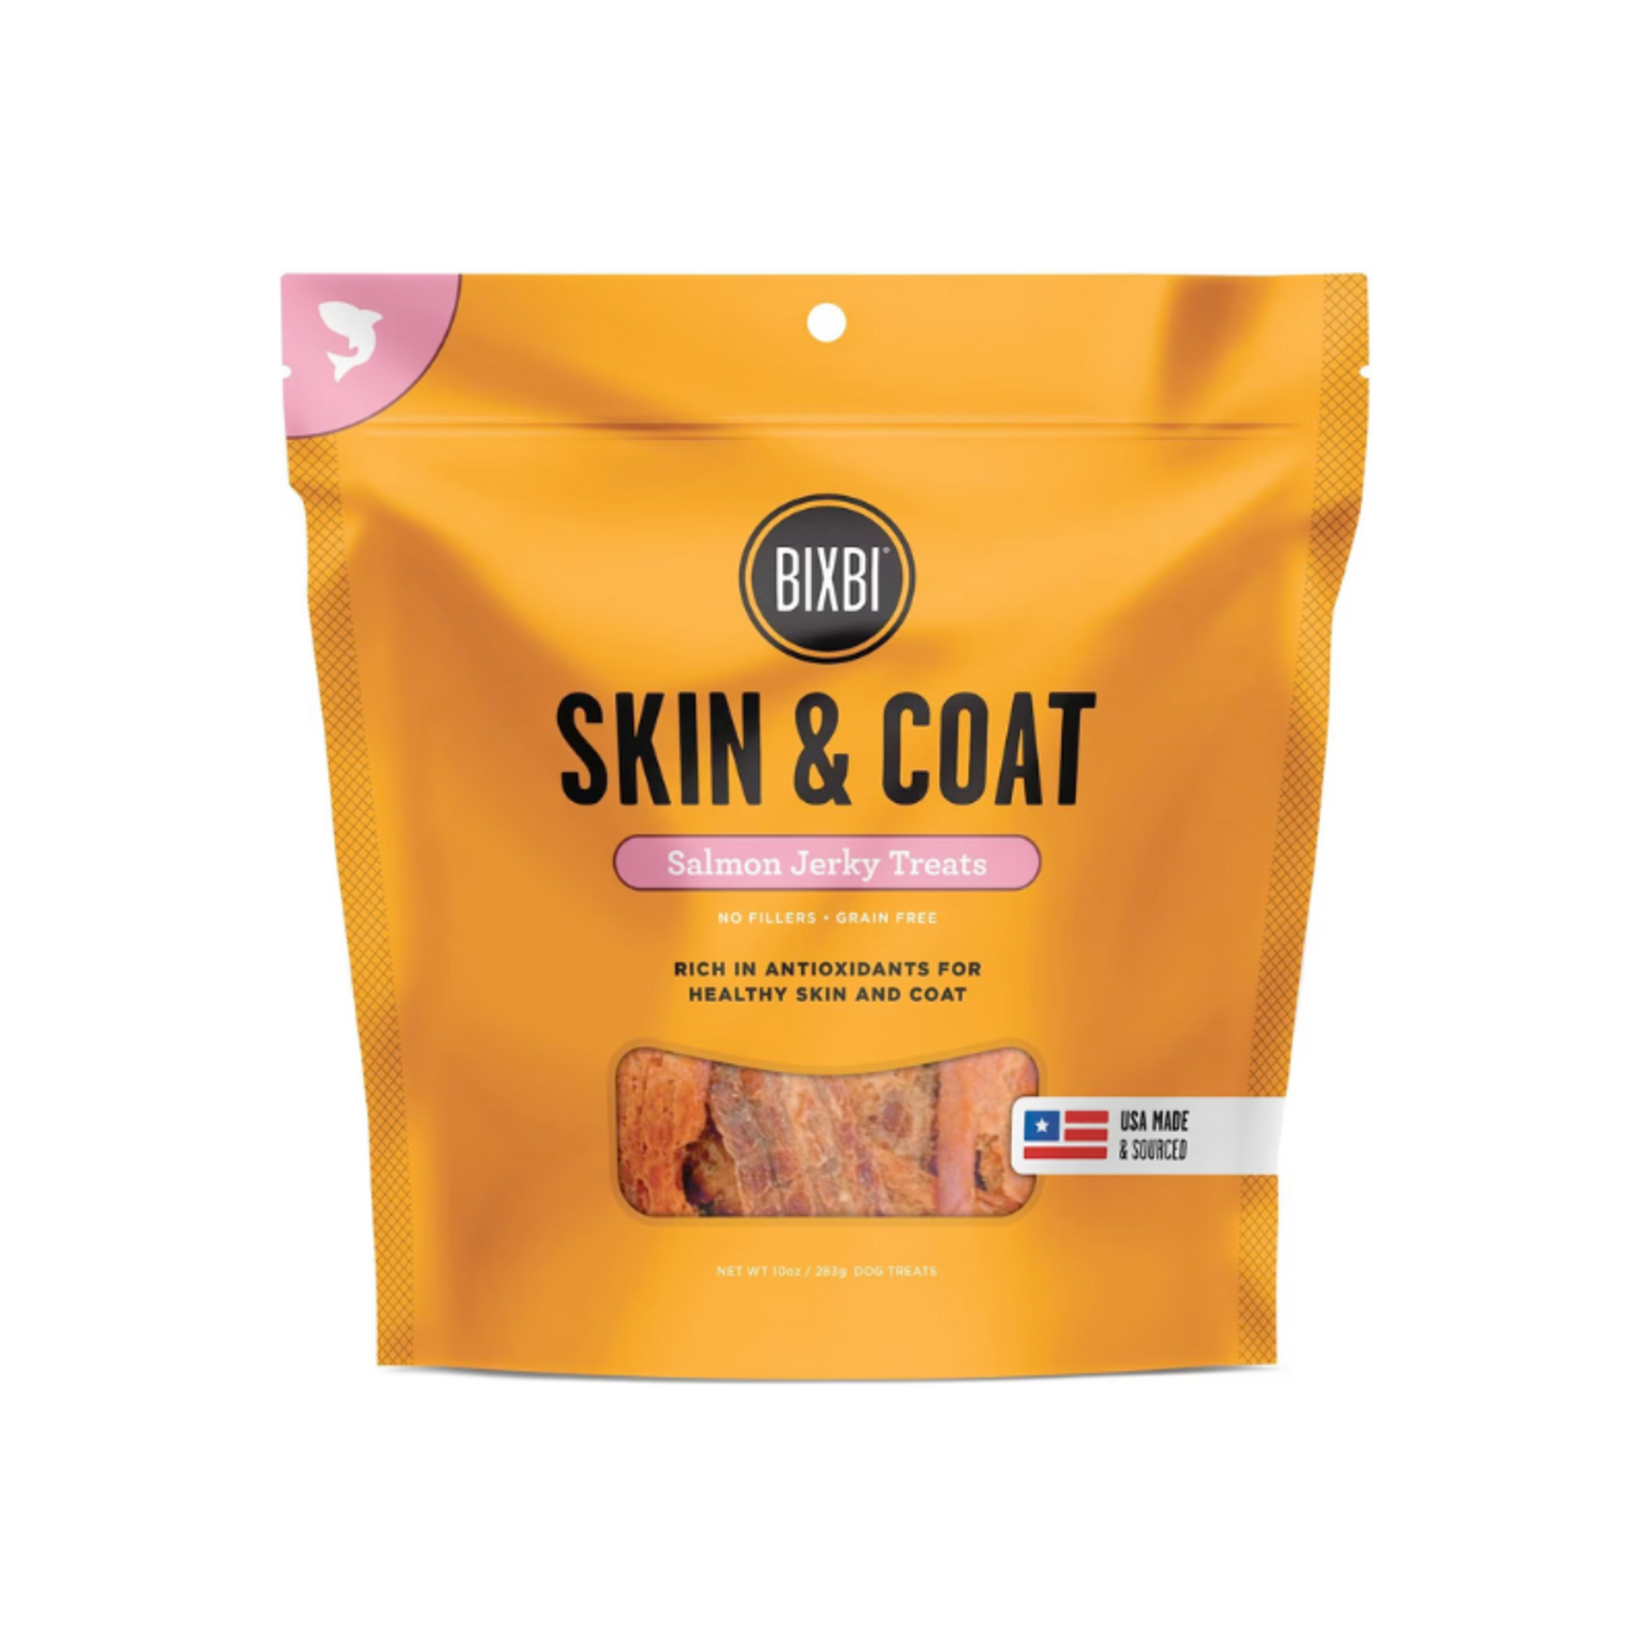 Bixbi 10 oz. - Salmon Jerky - Skin and Coat - Bixbi